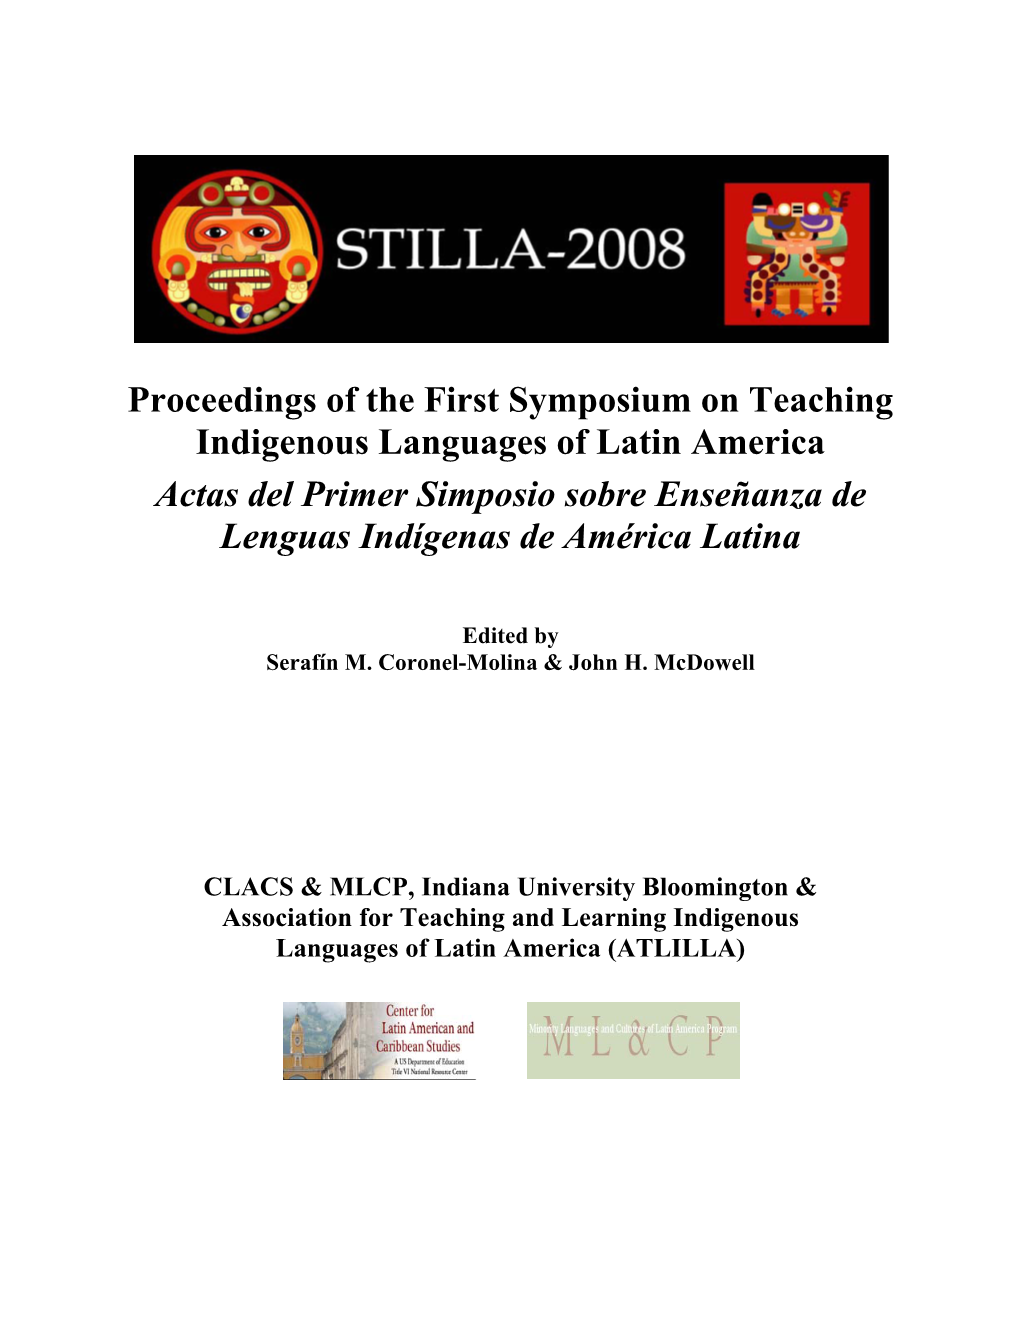 STILLA 2008 Proceedings